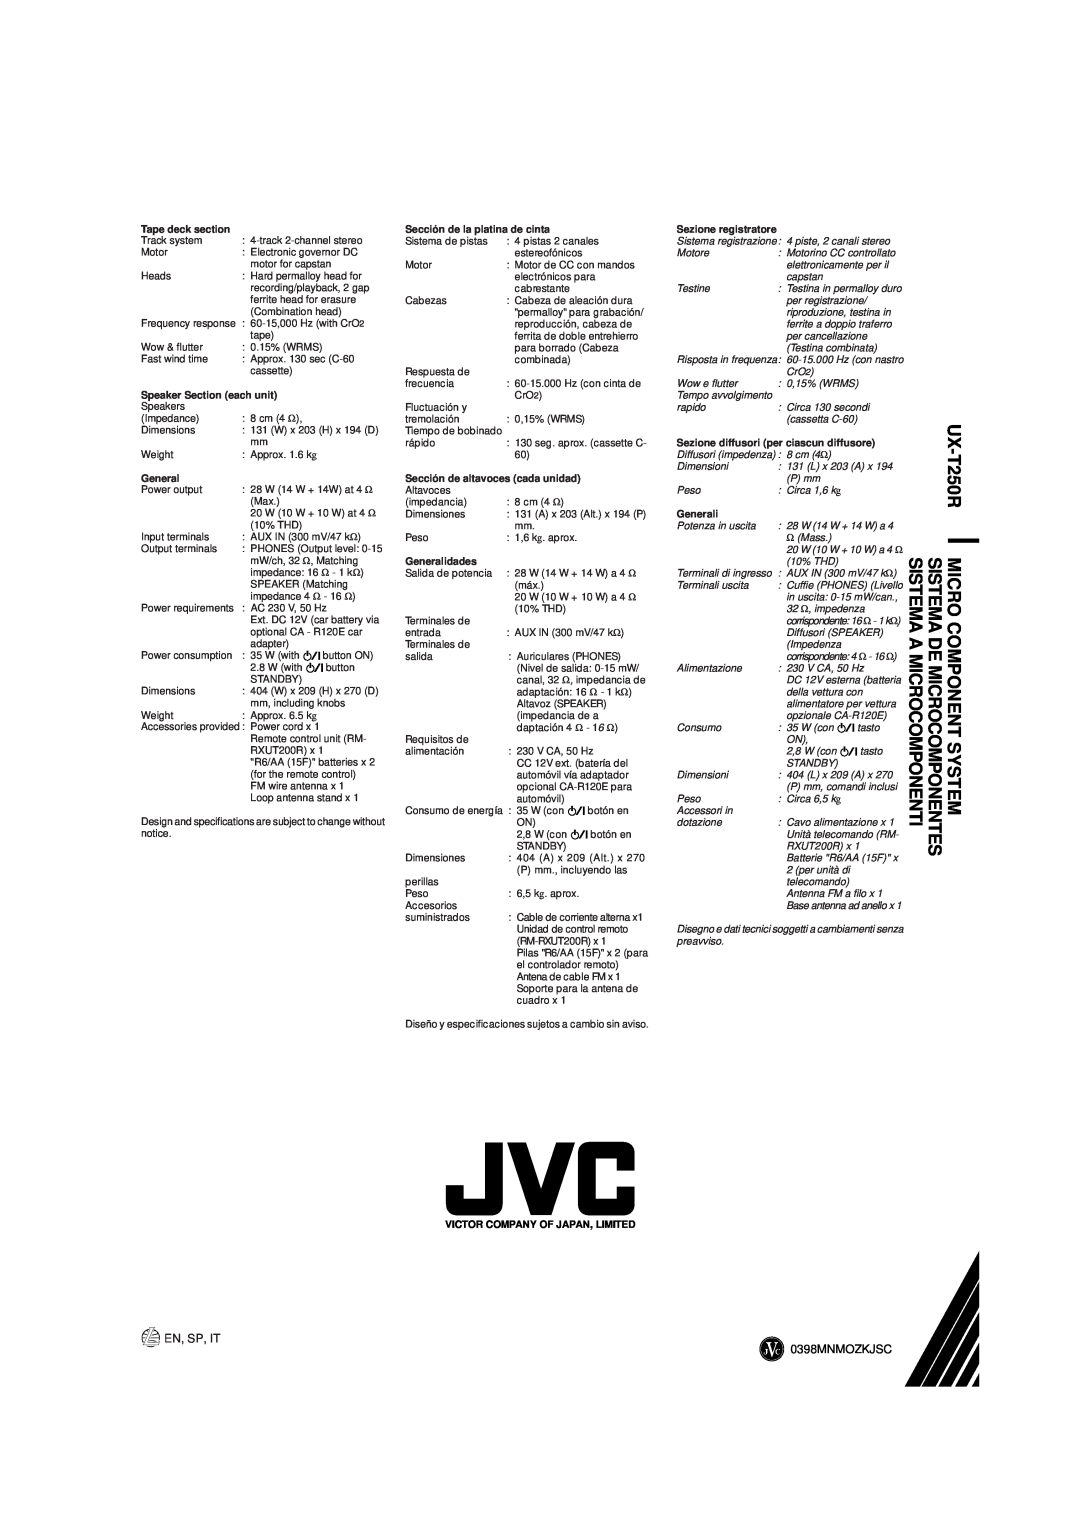 JVC LVT0059-001A Tape deck section, Speaker Section each unit, General, Sistema registrazione, piste, 2 canali stereo 